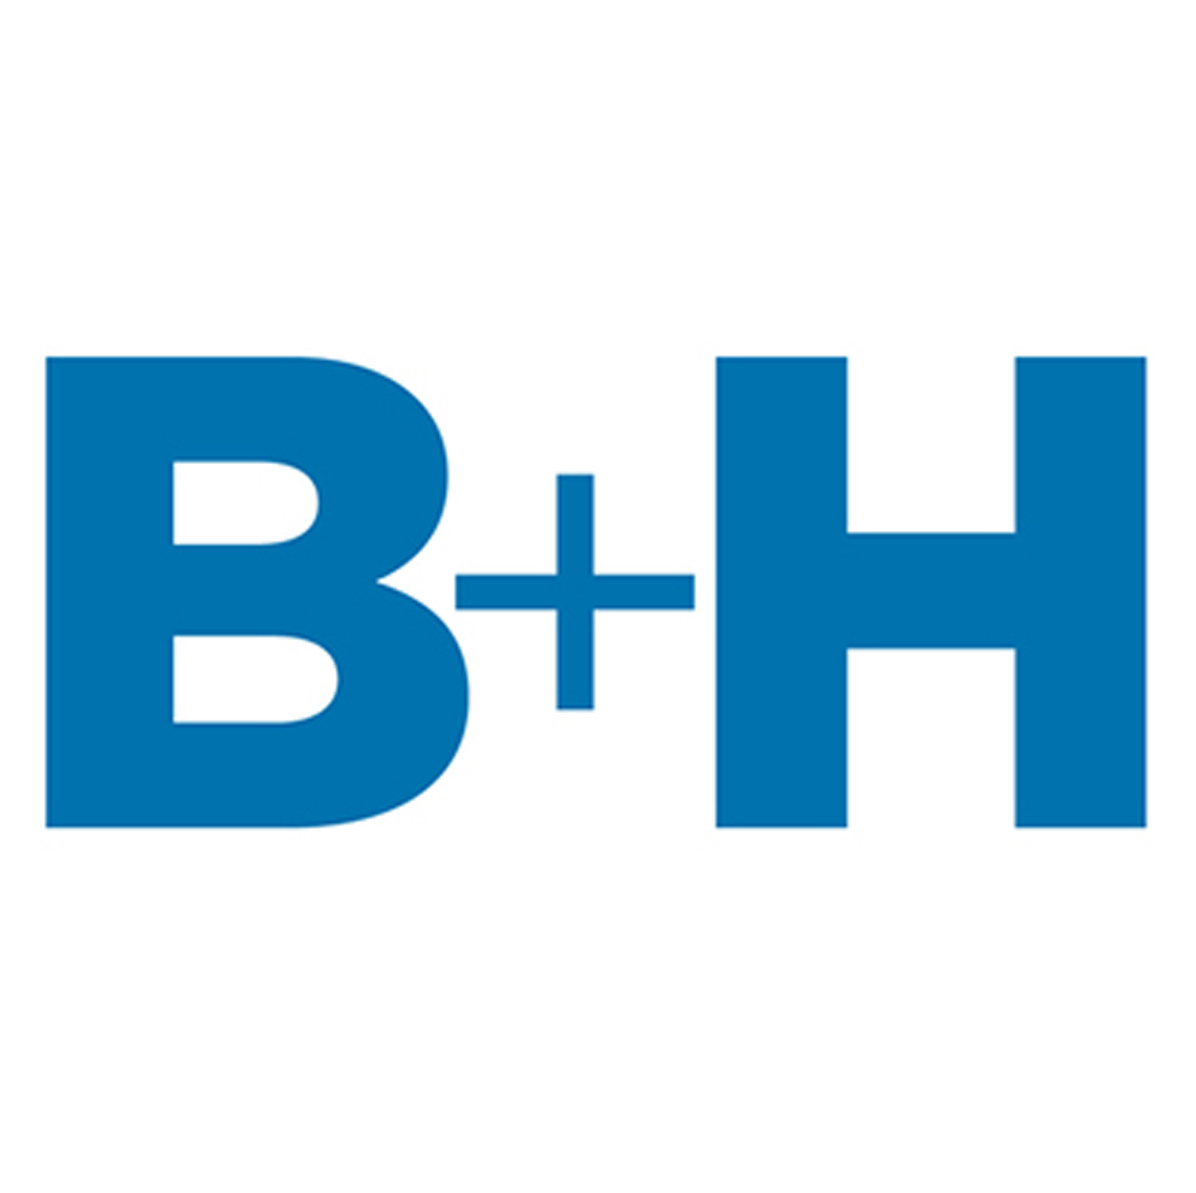 B+H Architects